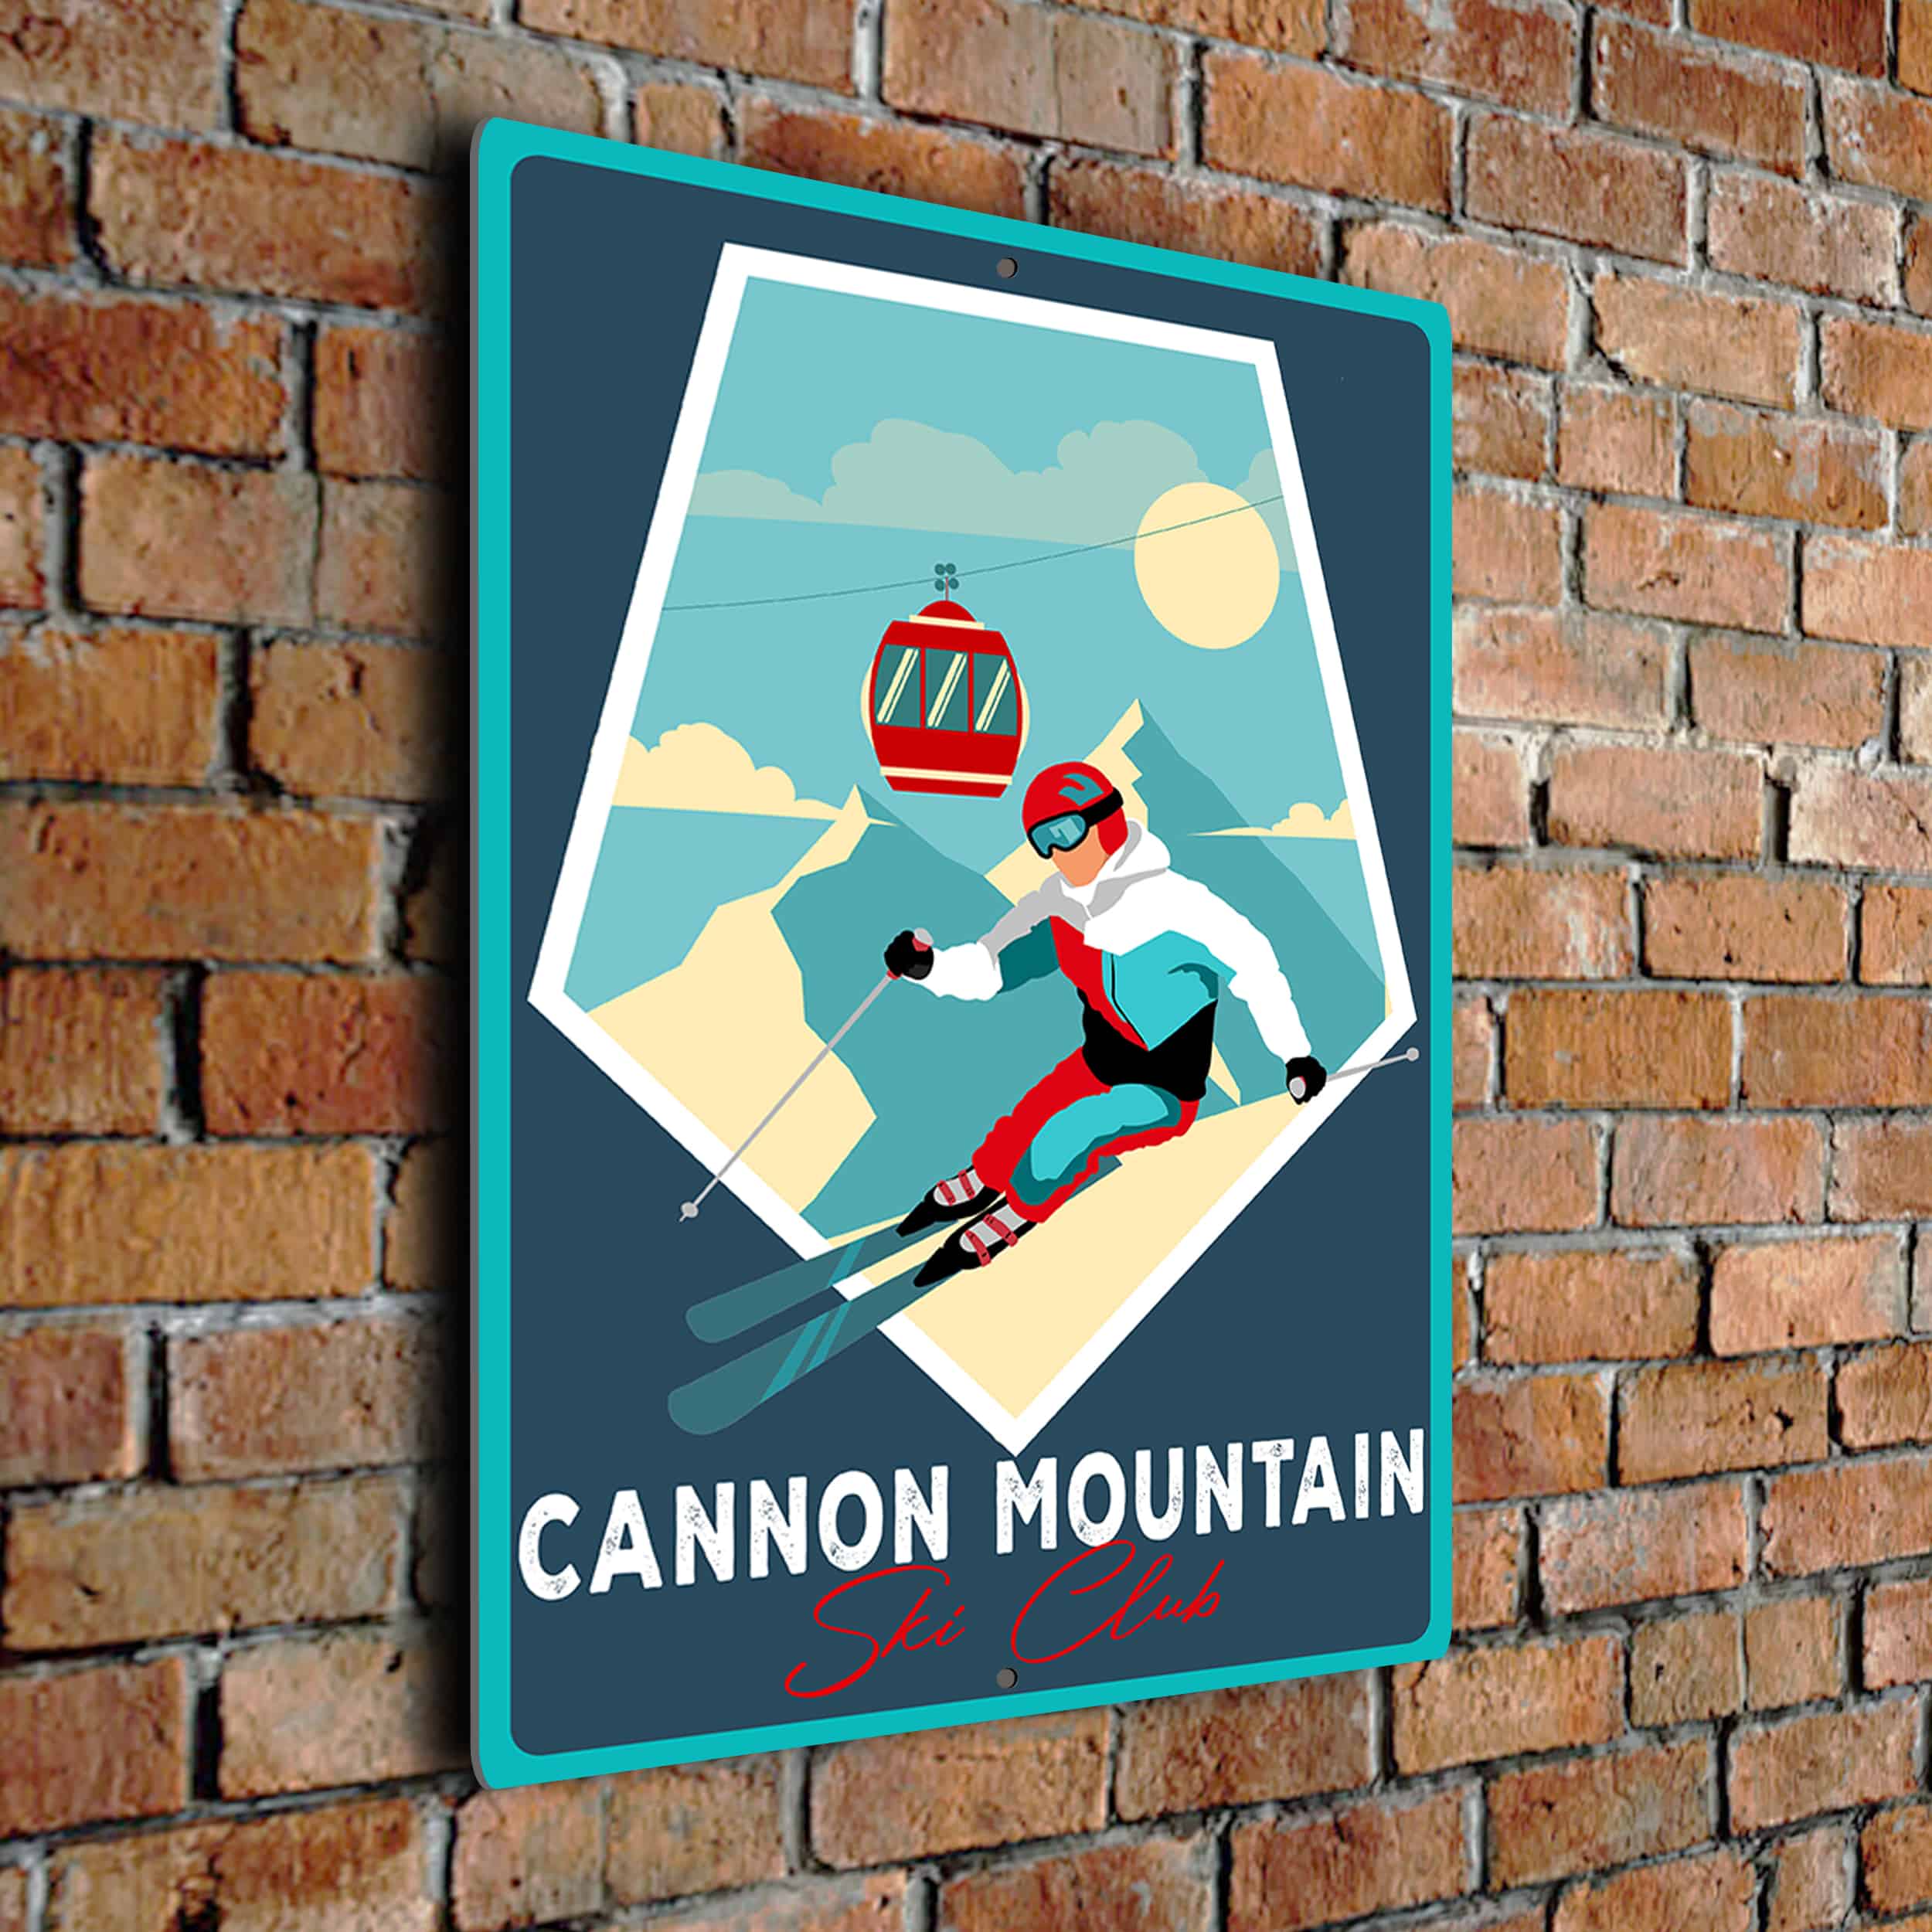 Cannon-Mountain-Ski-Club-Sign.jpg